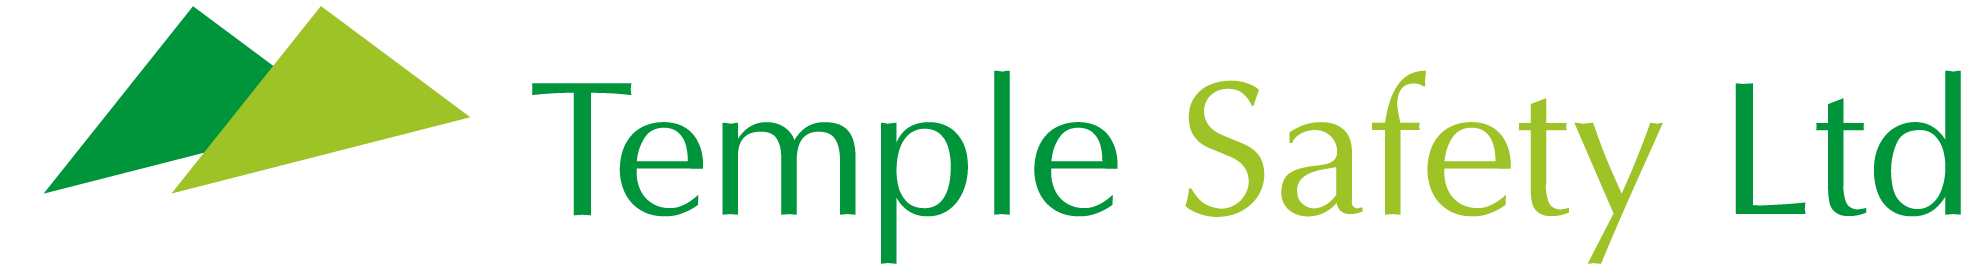 Temple Safety Logo Landscape